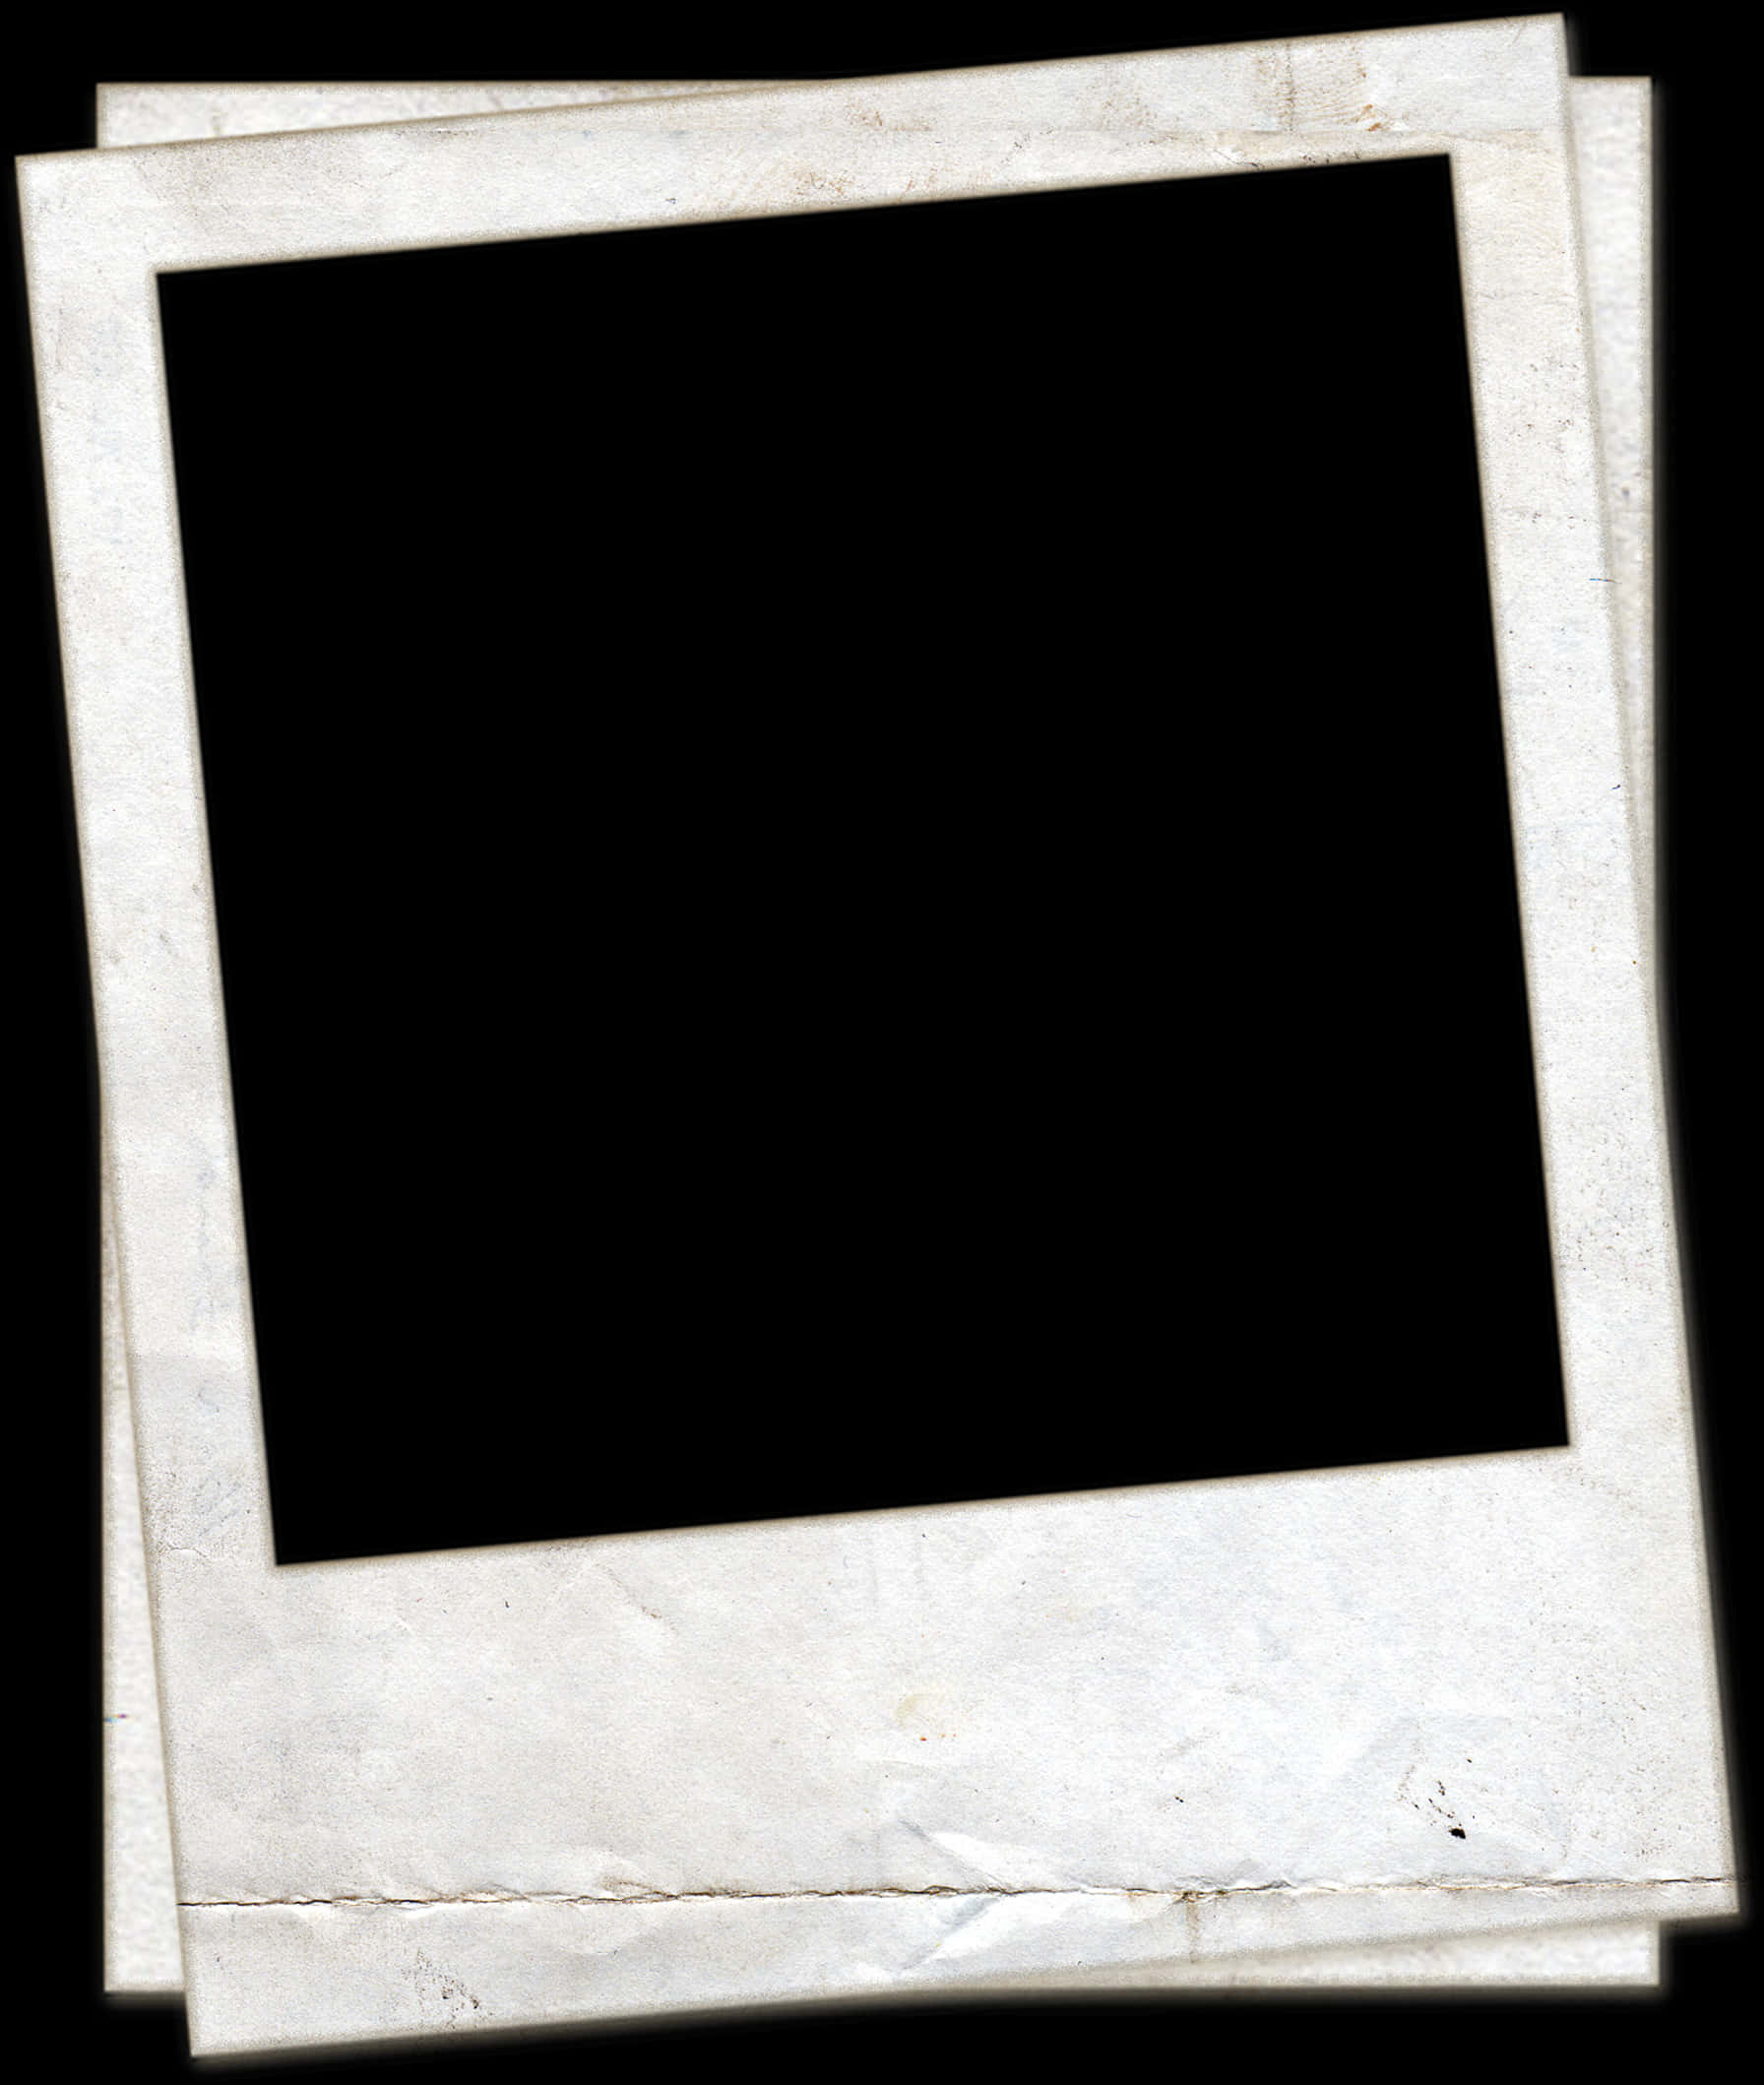 A Polaroid Of A Black Background